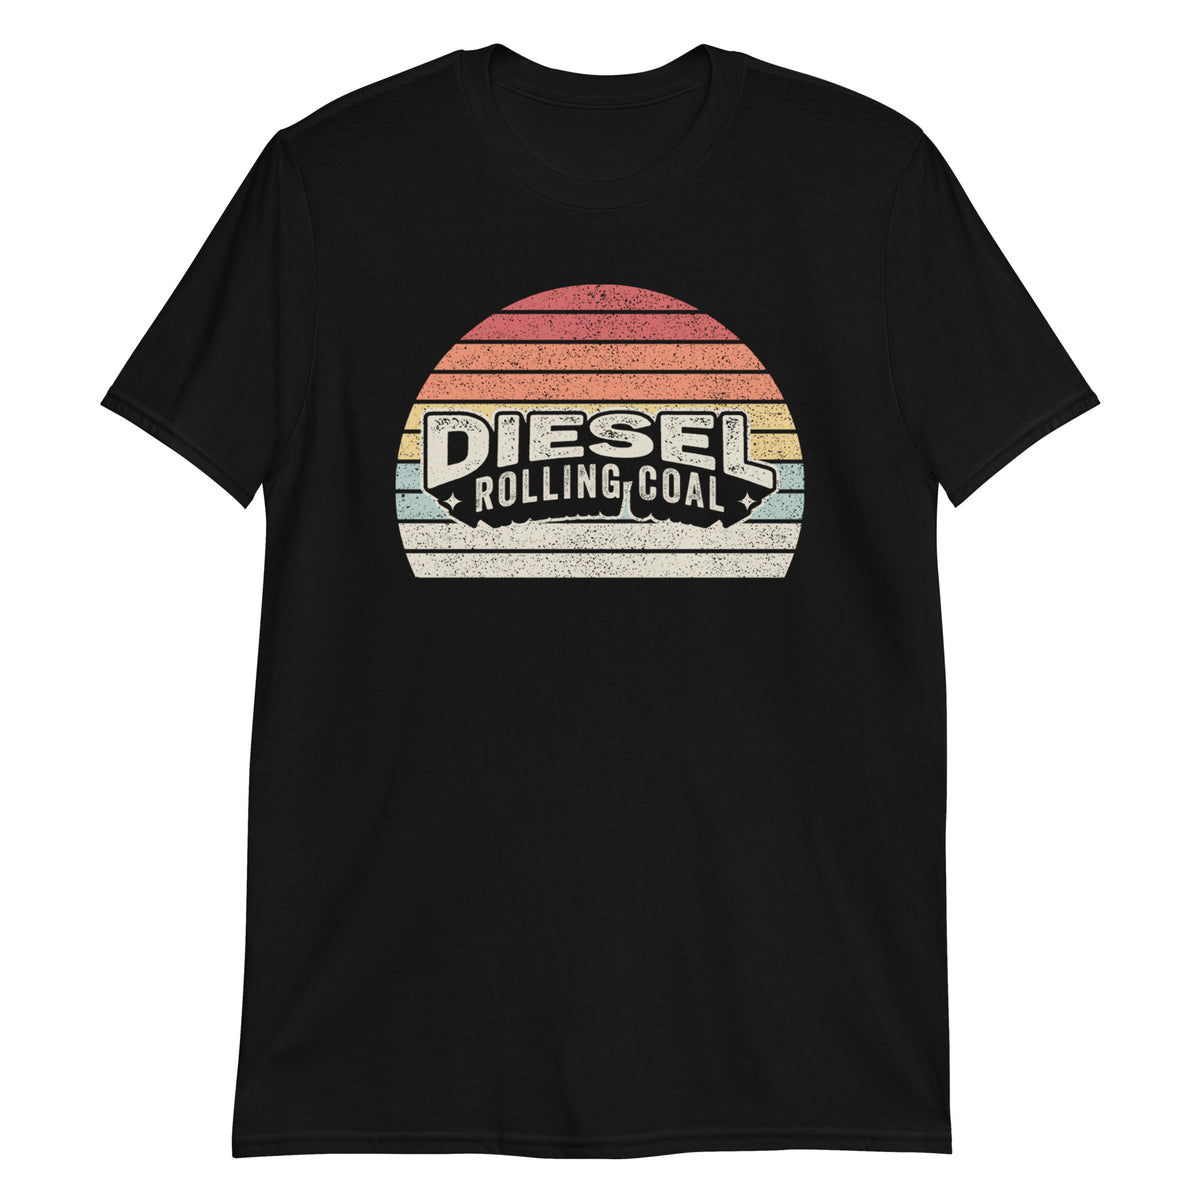 Diesel Rolling Coal T-Shirt